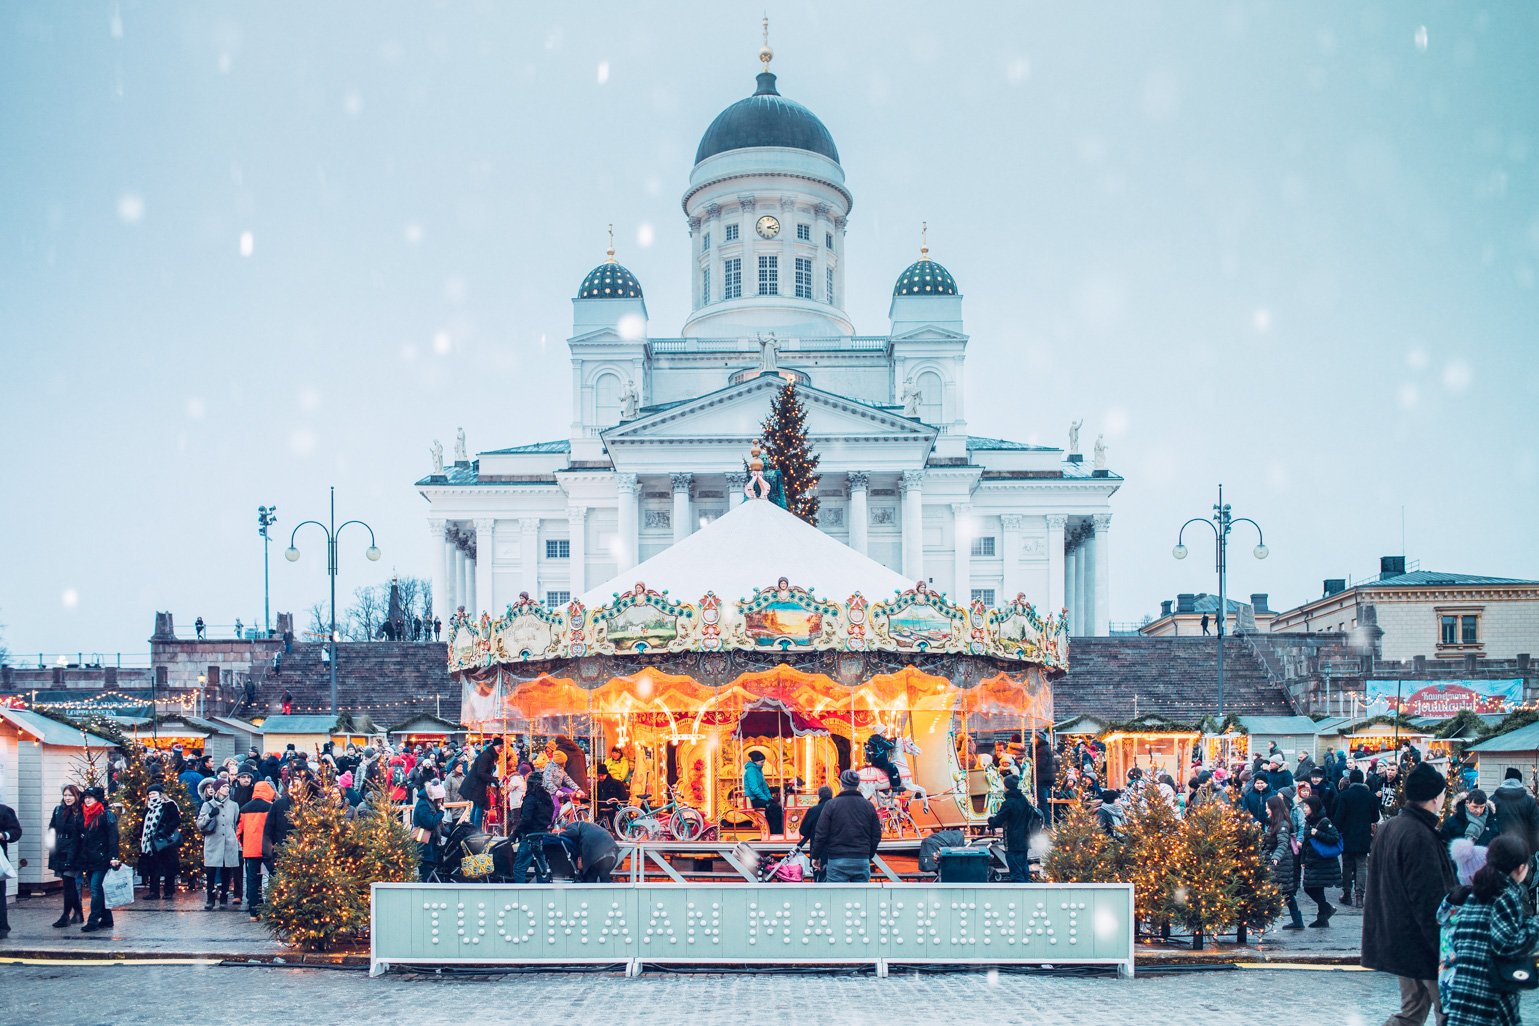 Experience Helsinki Christmas Market in Finland in December 